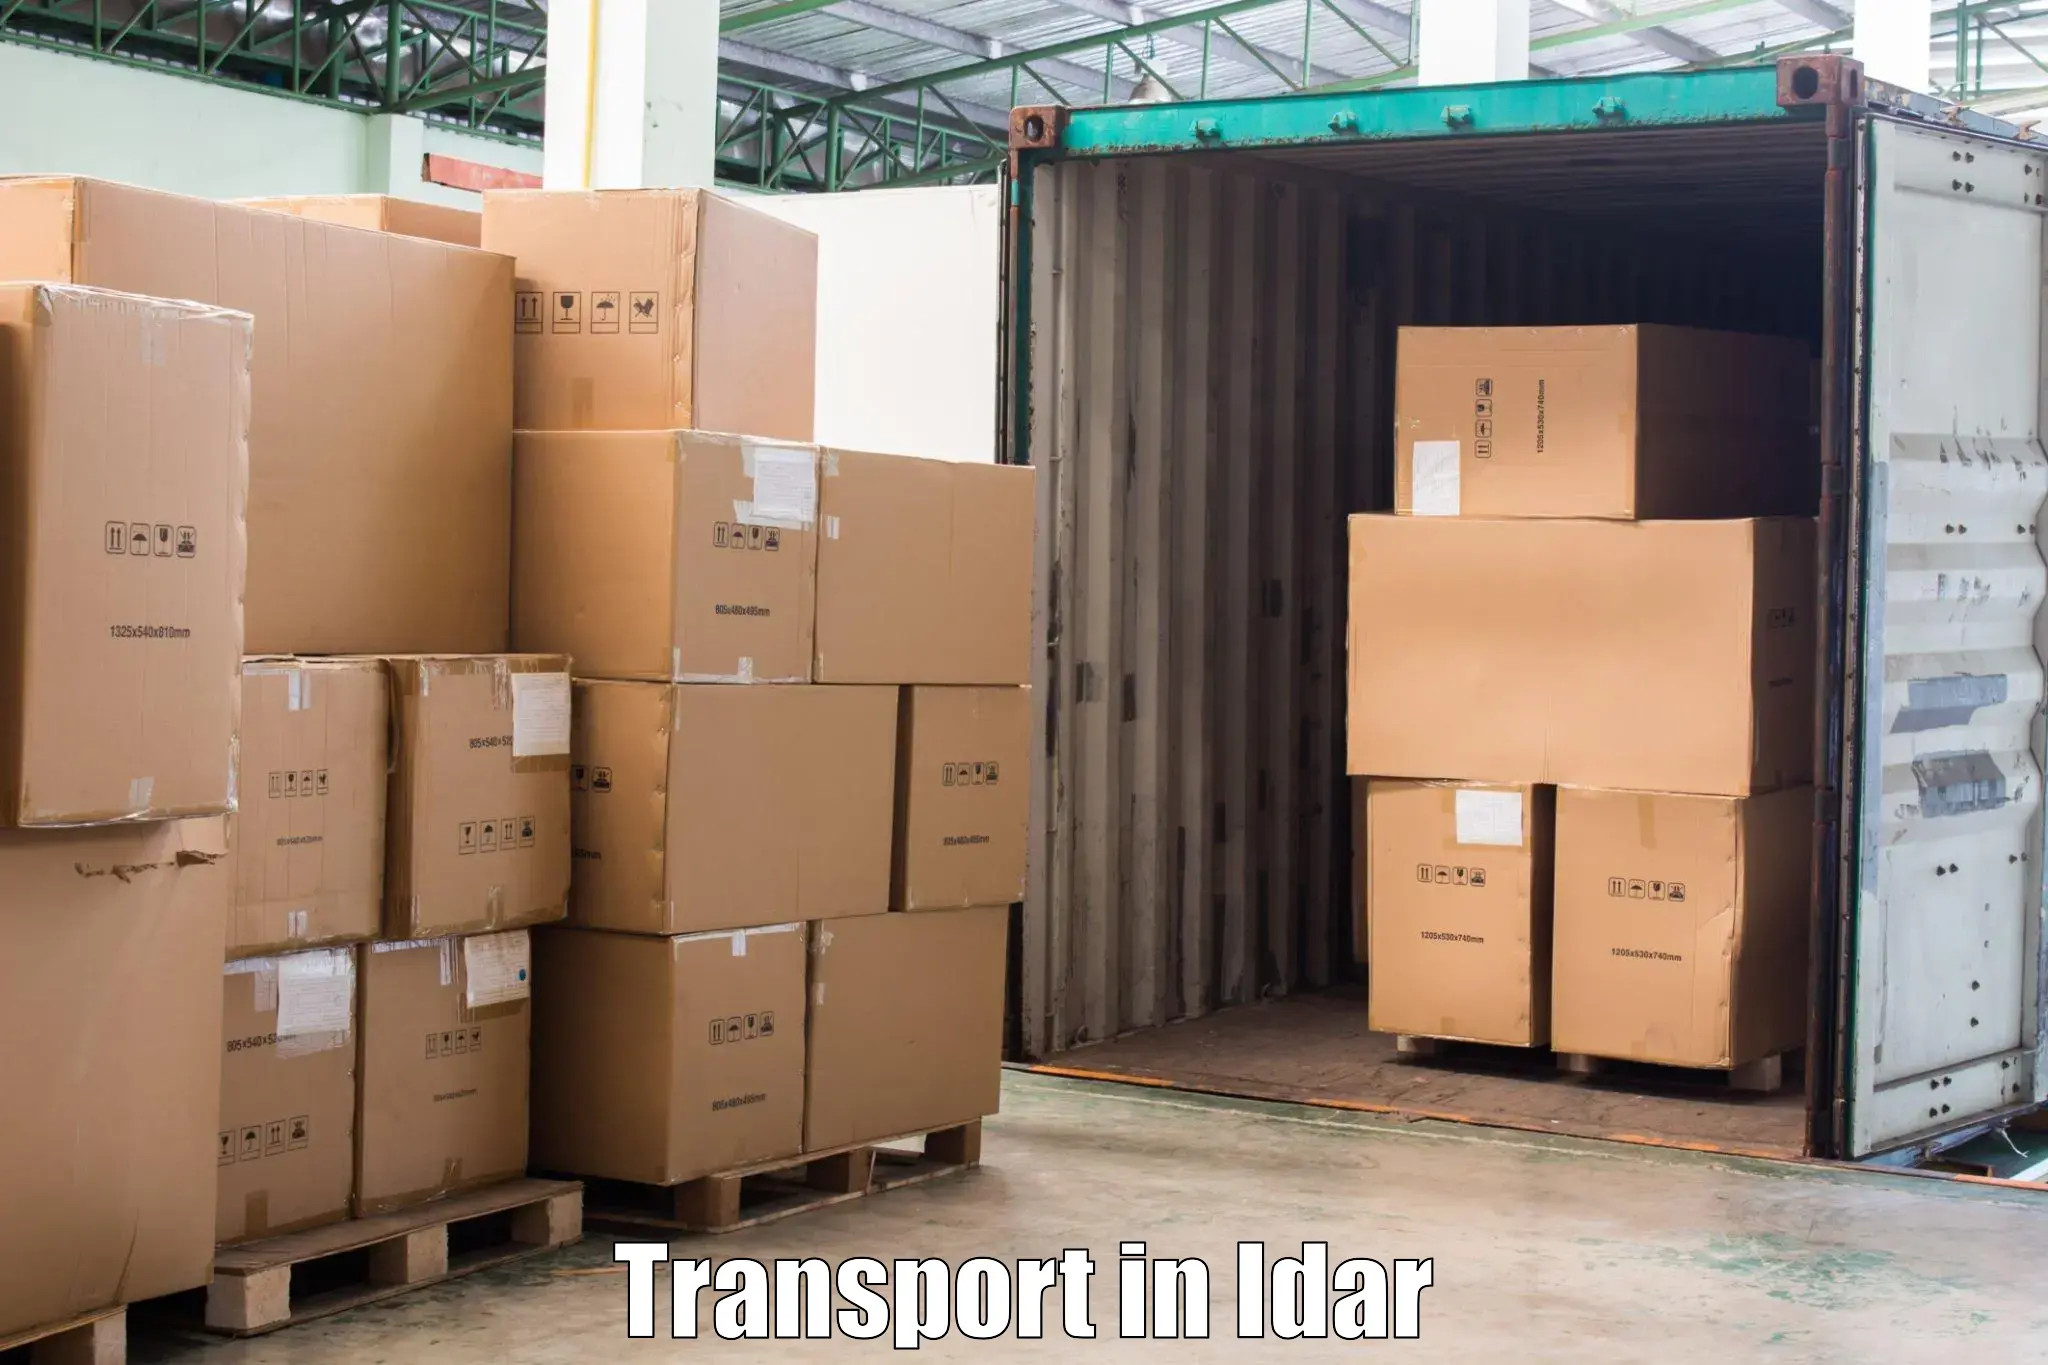 Daily parcel service transport in Idar